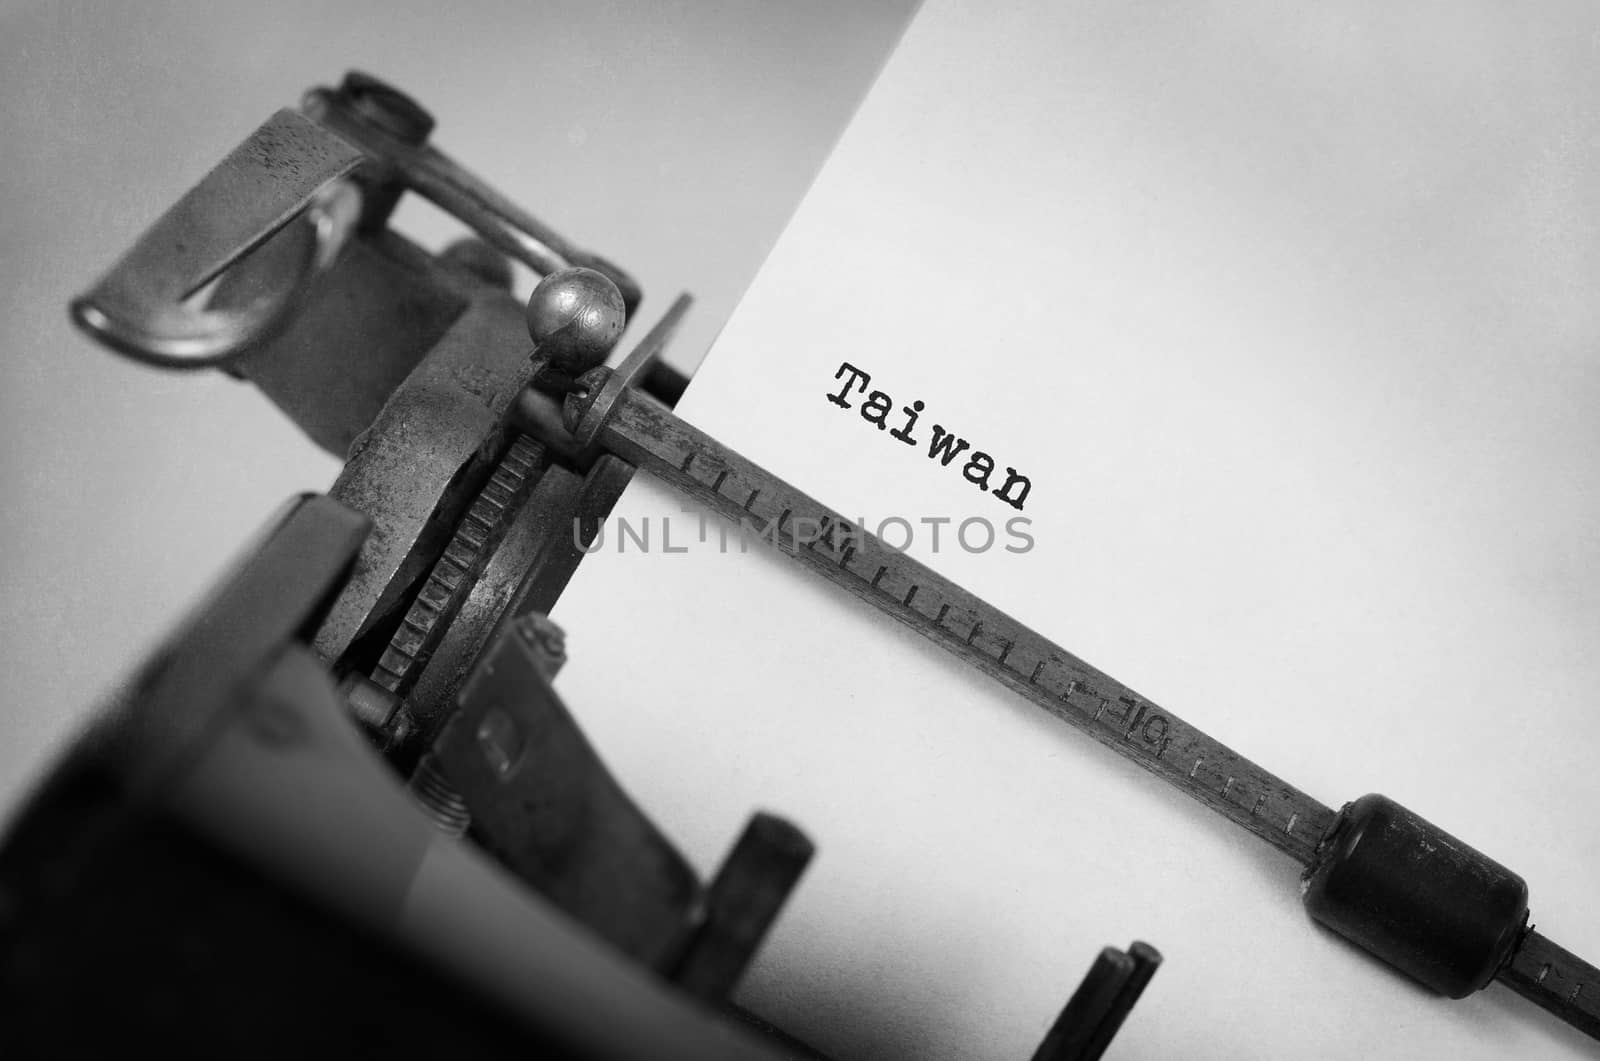 Old typewriter - Taiwan by michaklootwijk